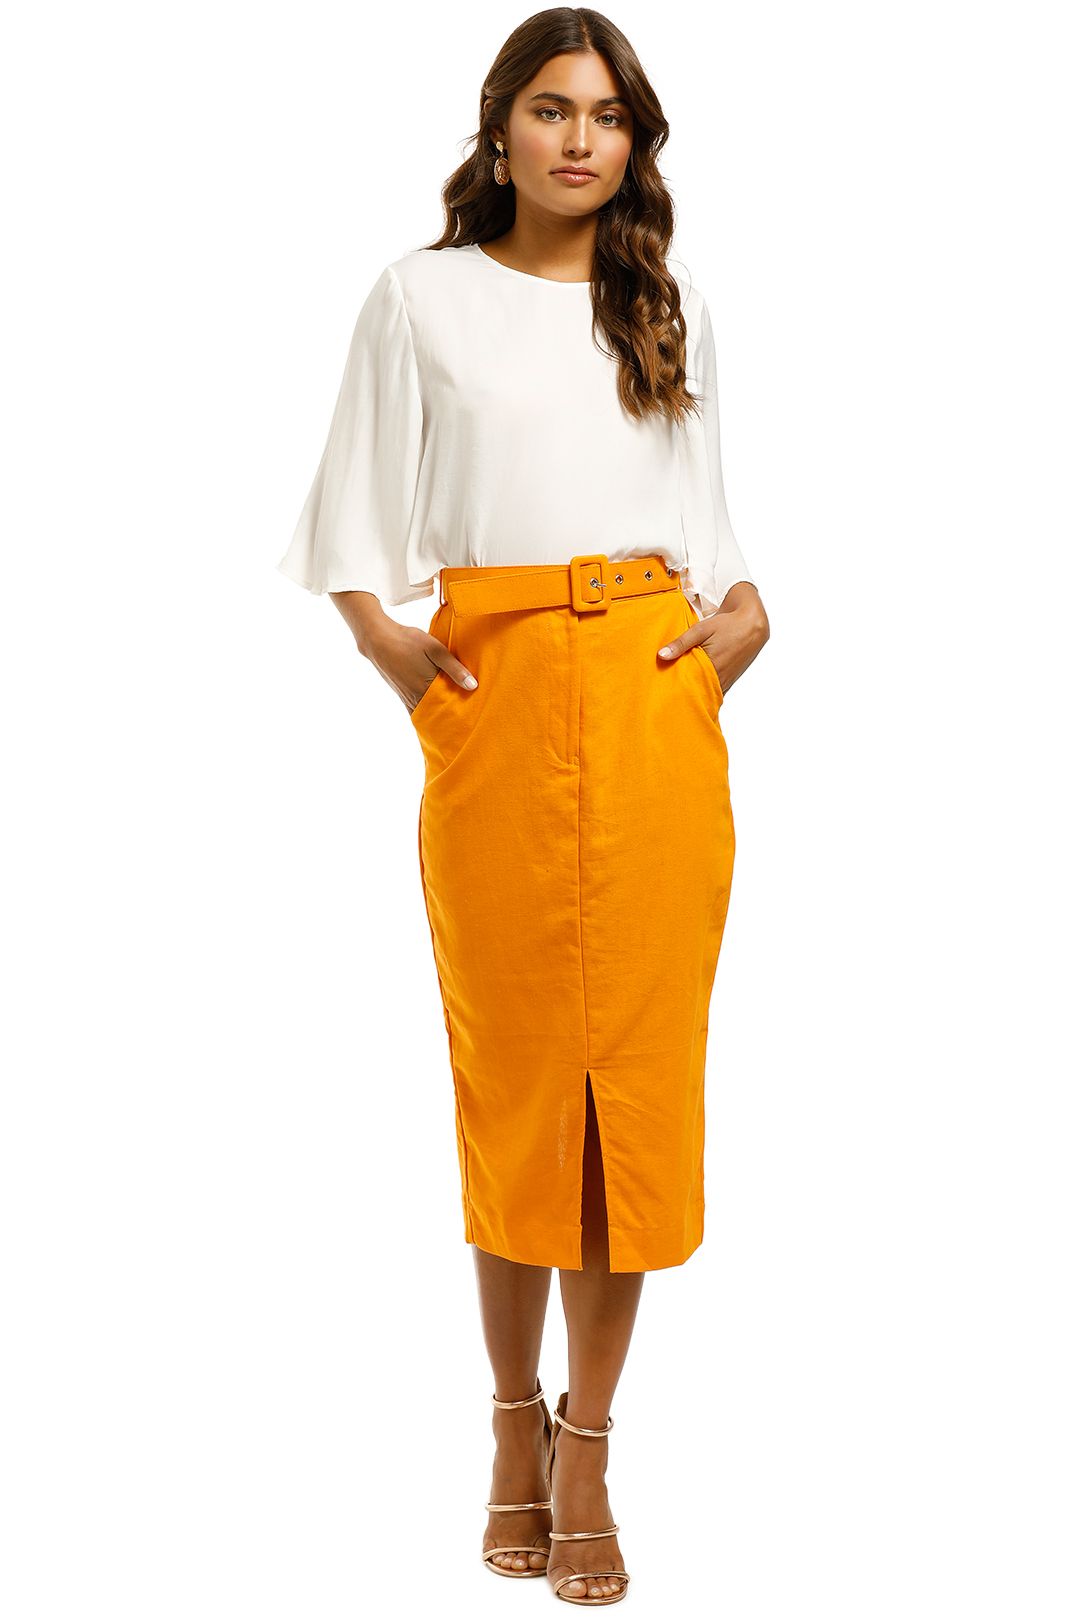 SWF-Orange-Pencil-Skirt-Orange-Front